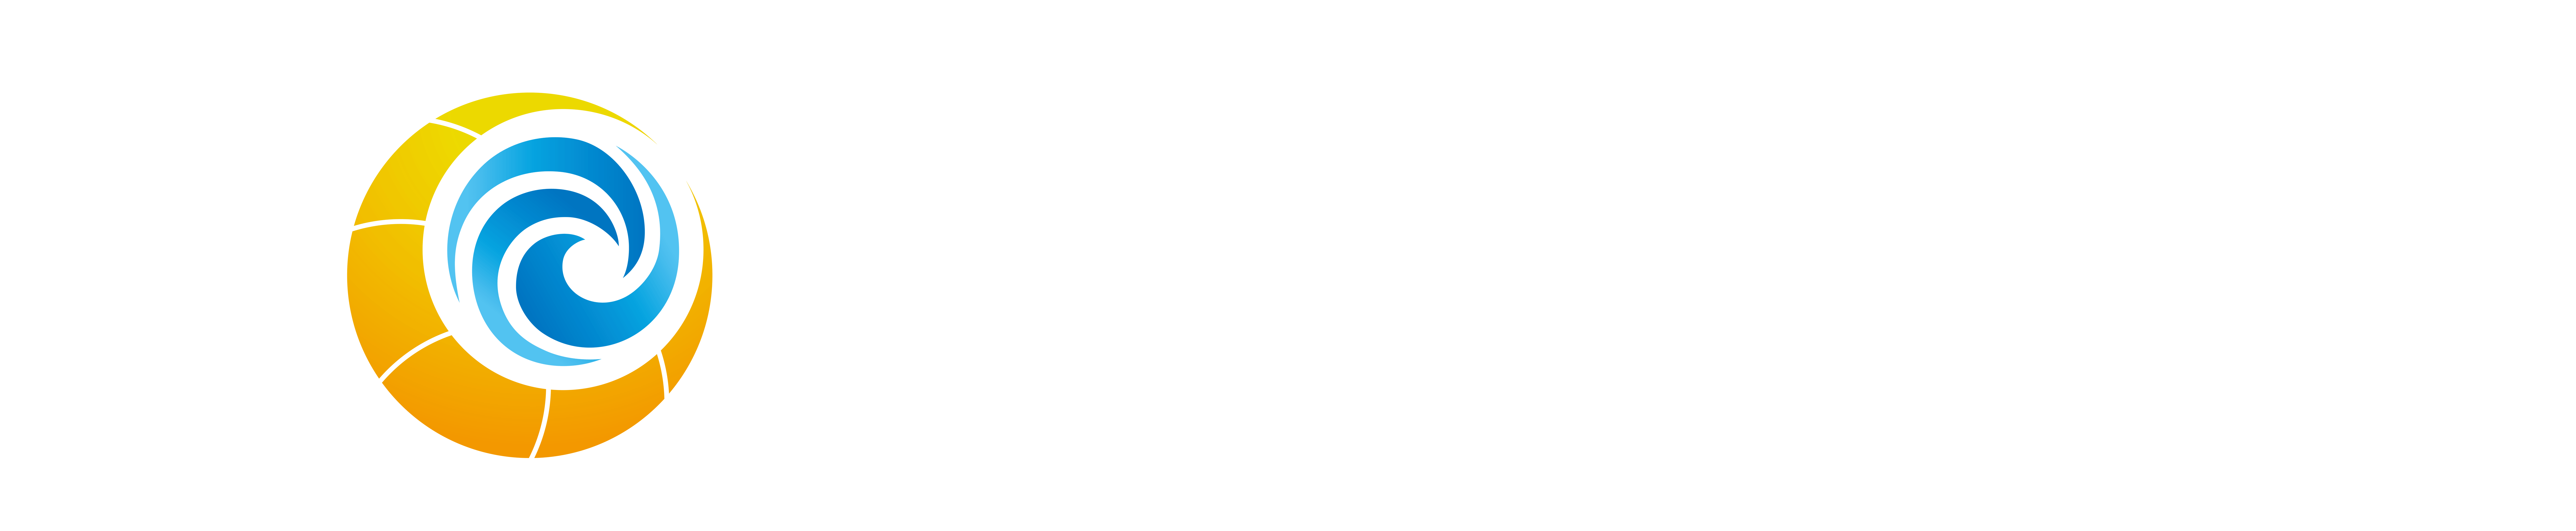 Moonton Logo